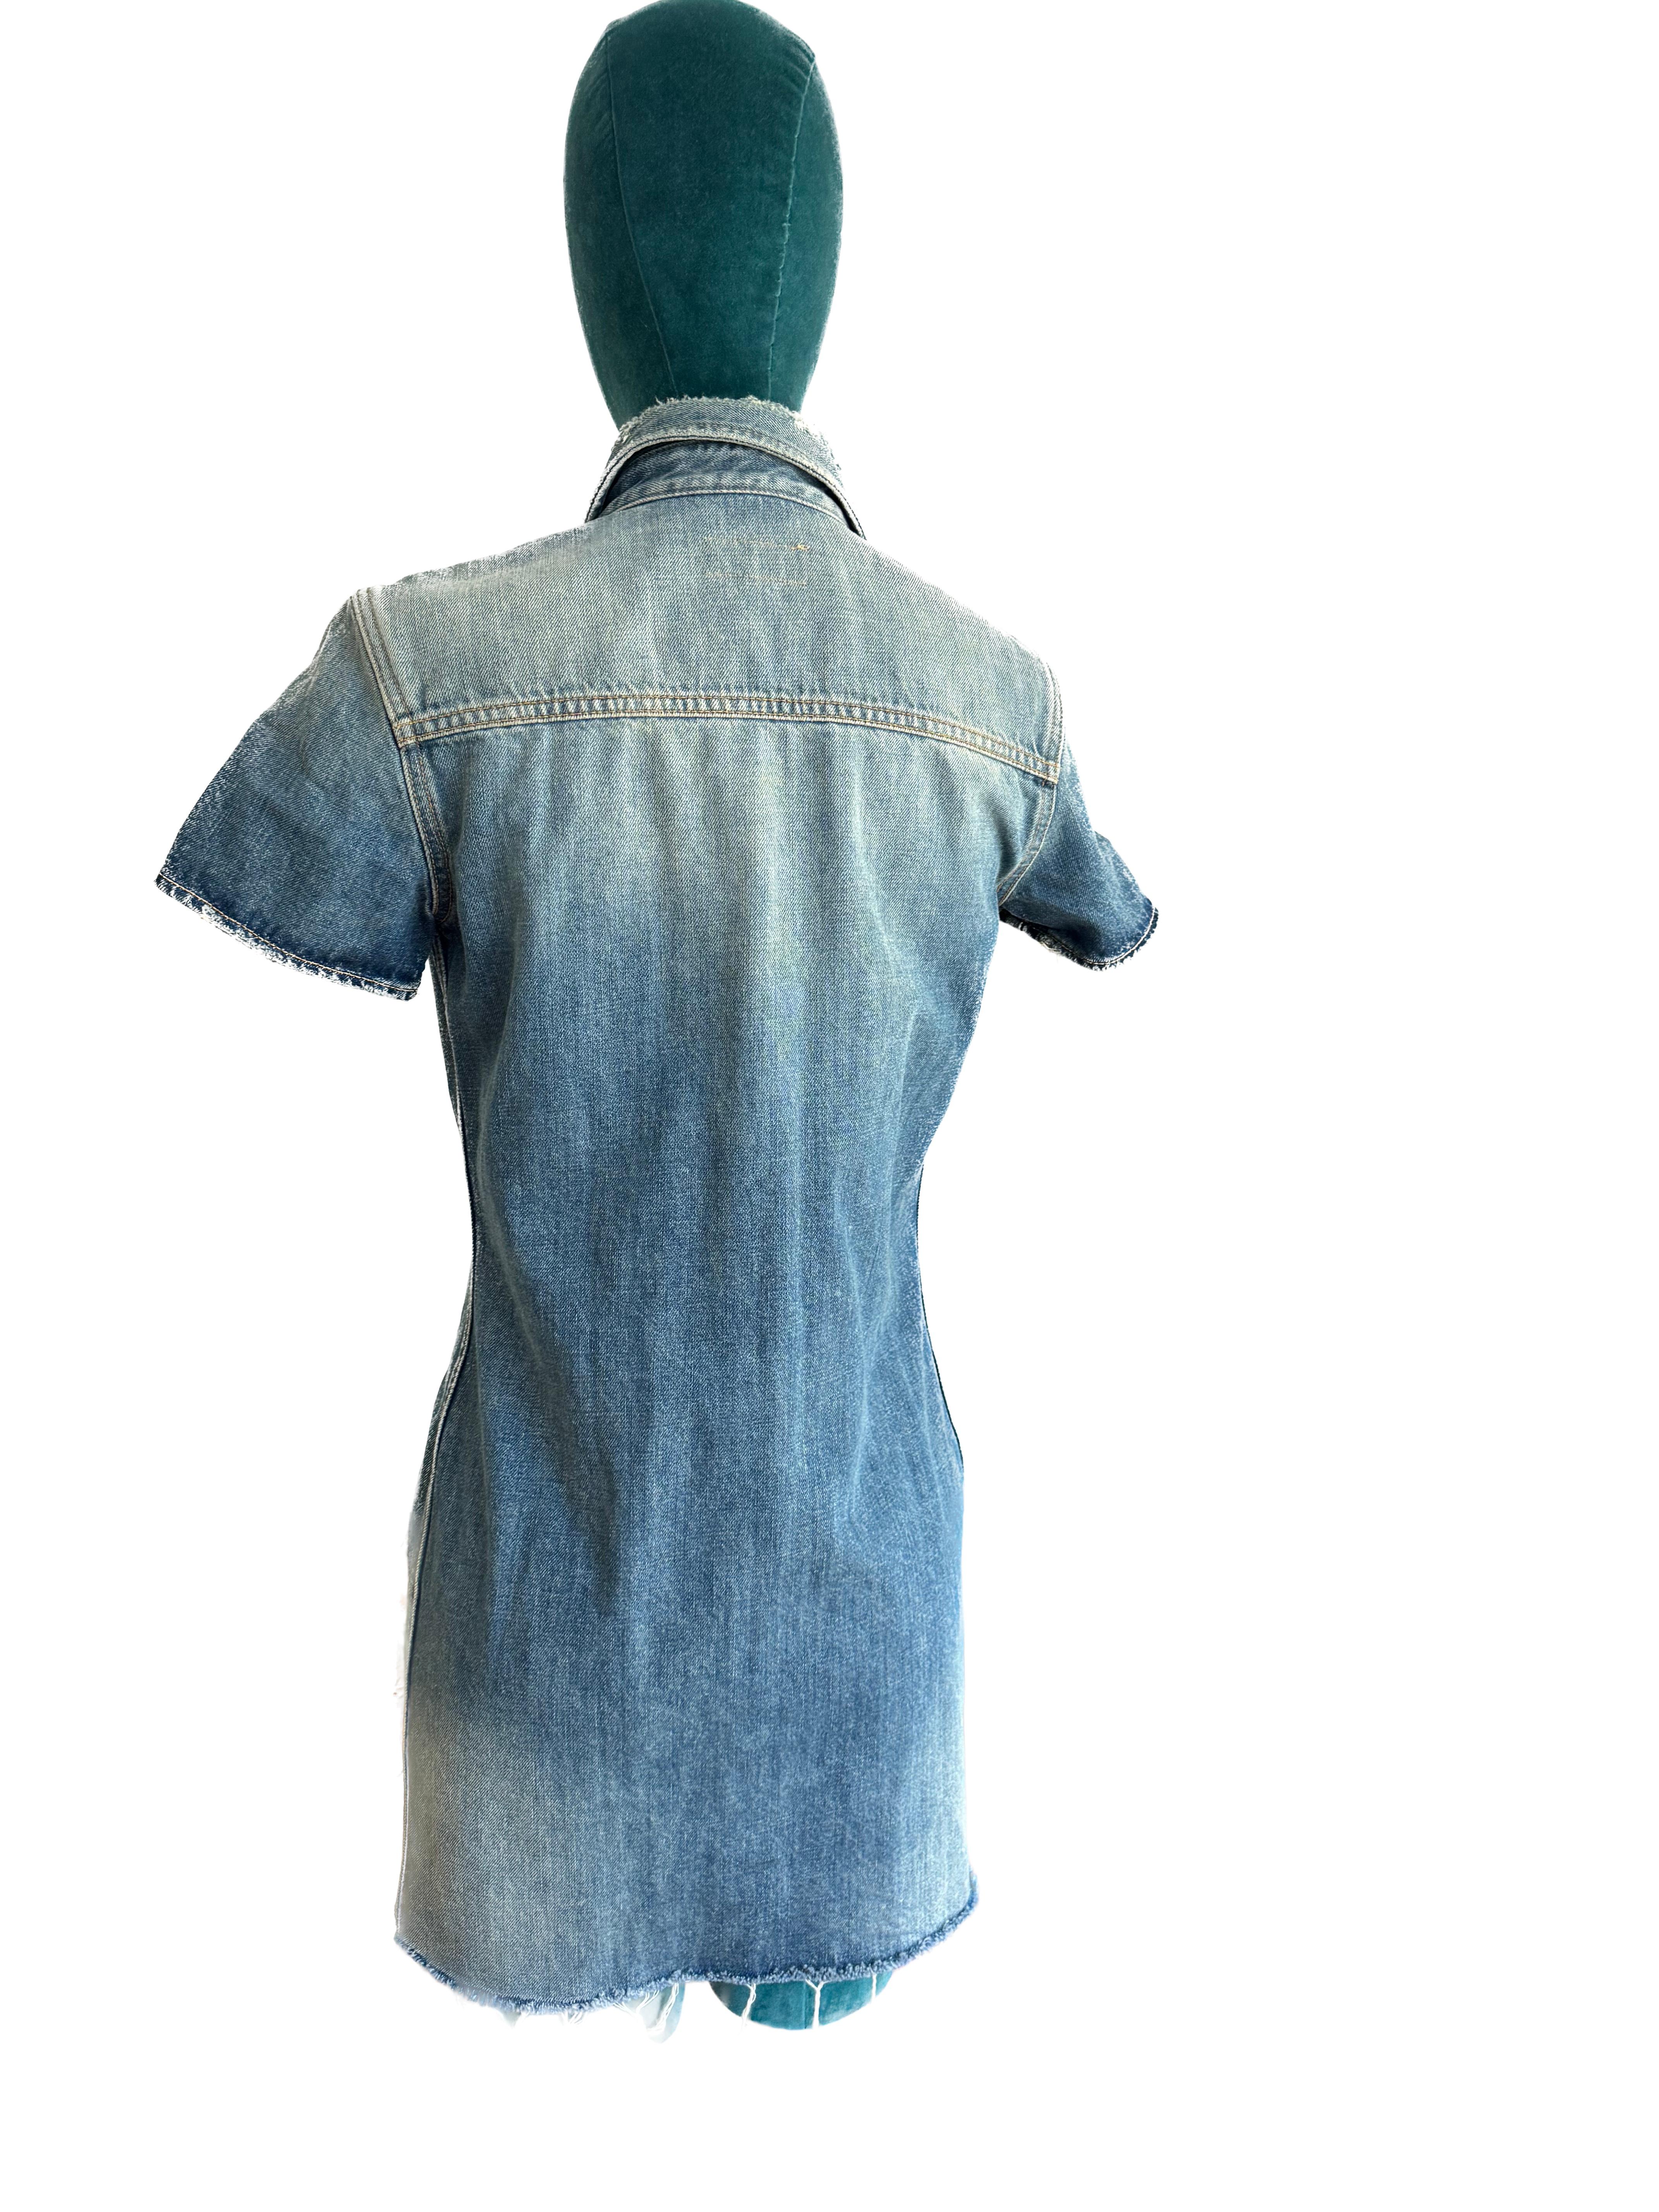 Satin Laurent Denim shirt Dress  In Excellent Condition For Sale In Toronto, CA